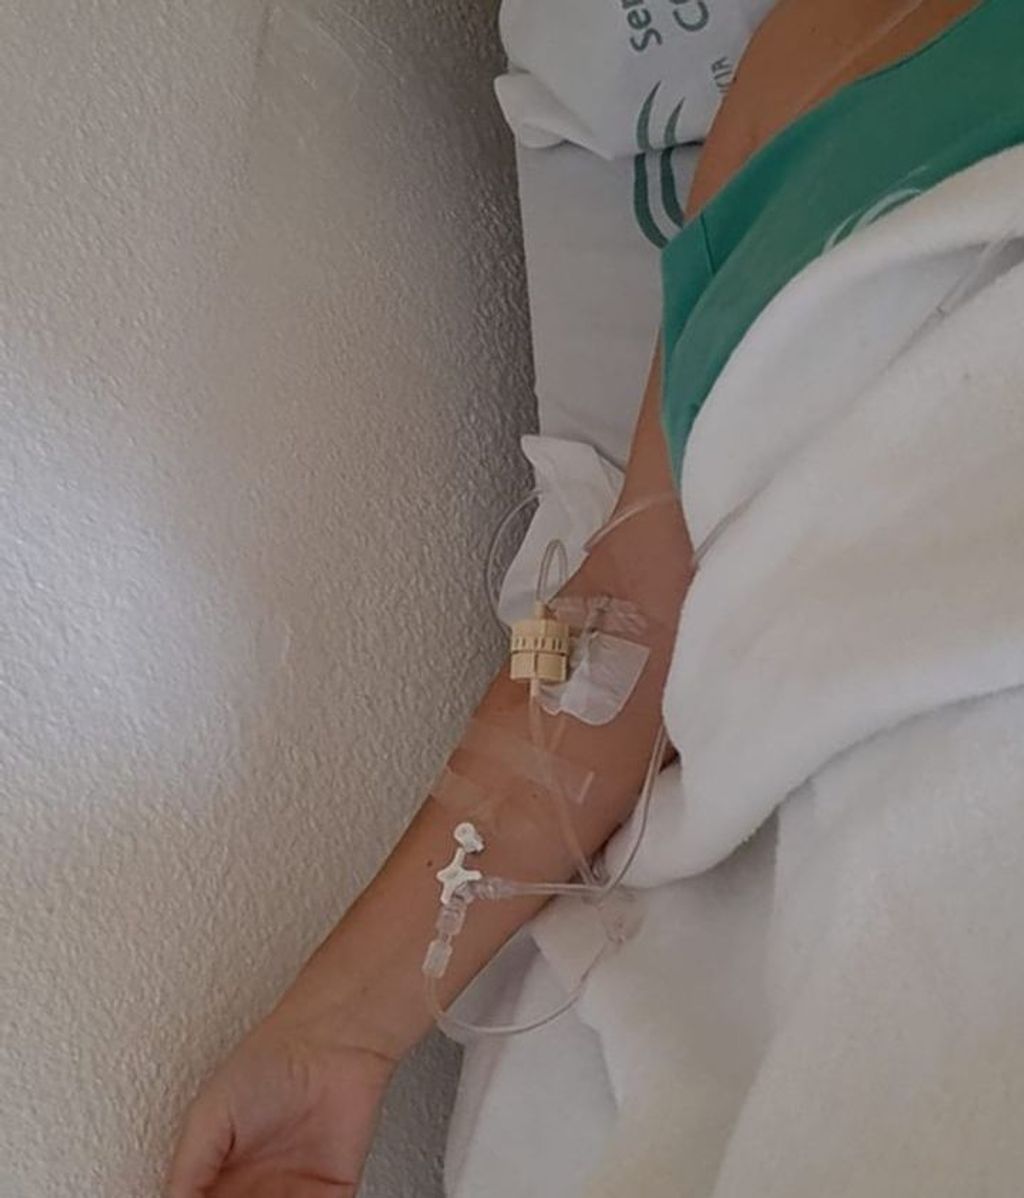 La madre de Kiko Jiménez está ingresada en el hospital